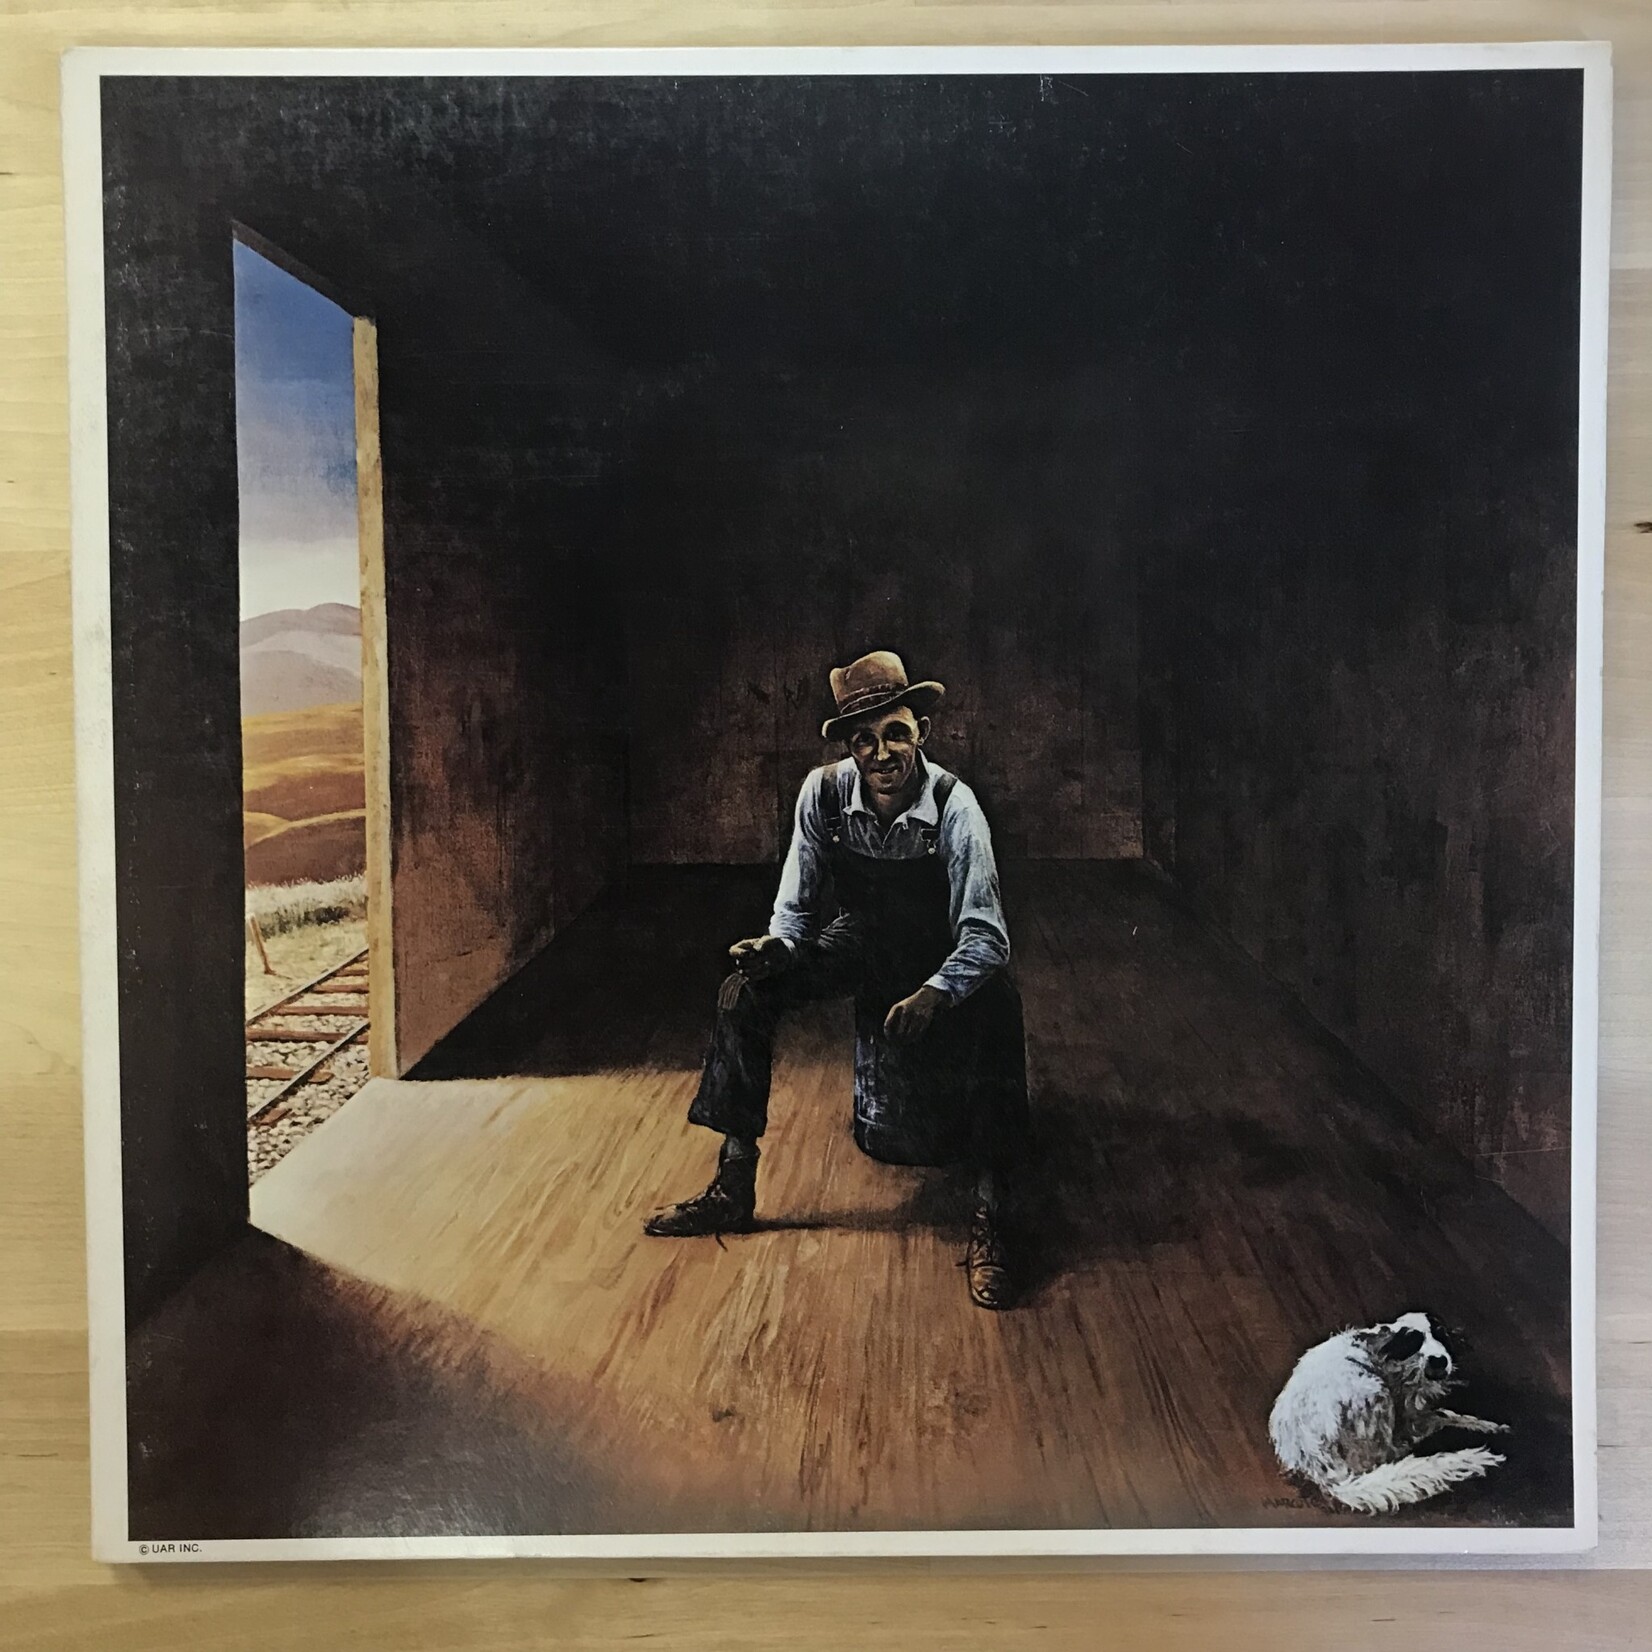 Don McLean - Homeless Brother - UA LA315G - Vinyl LP (USED)